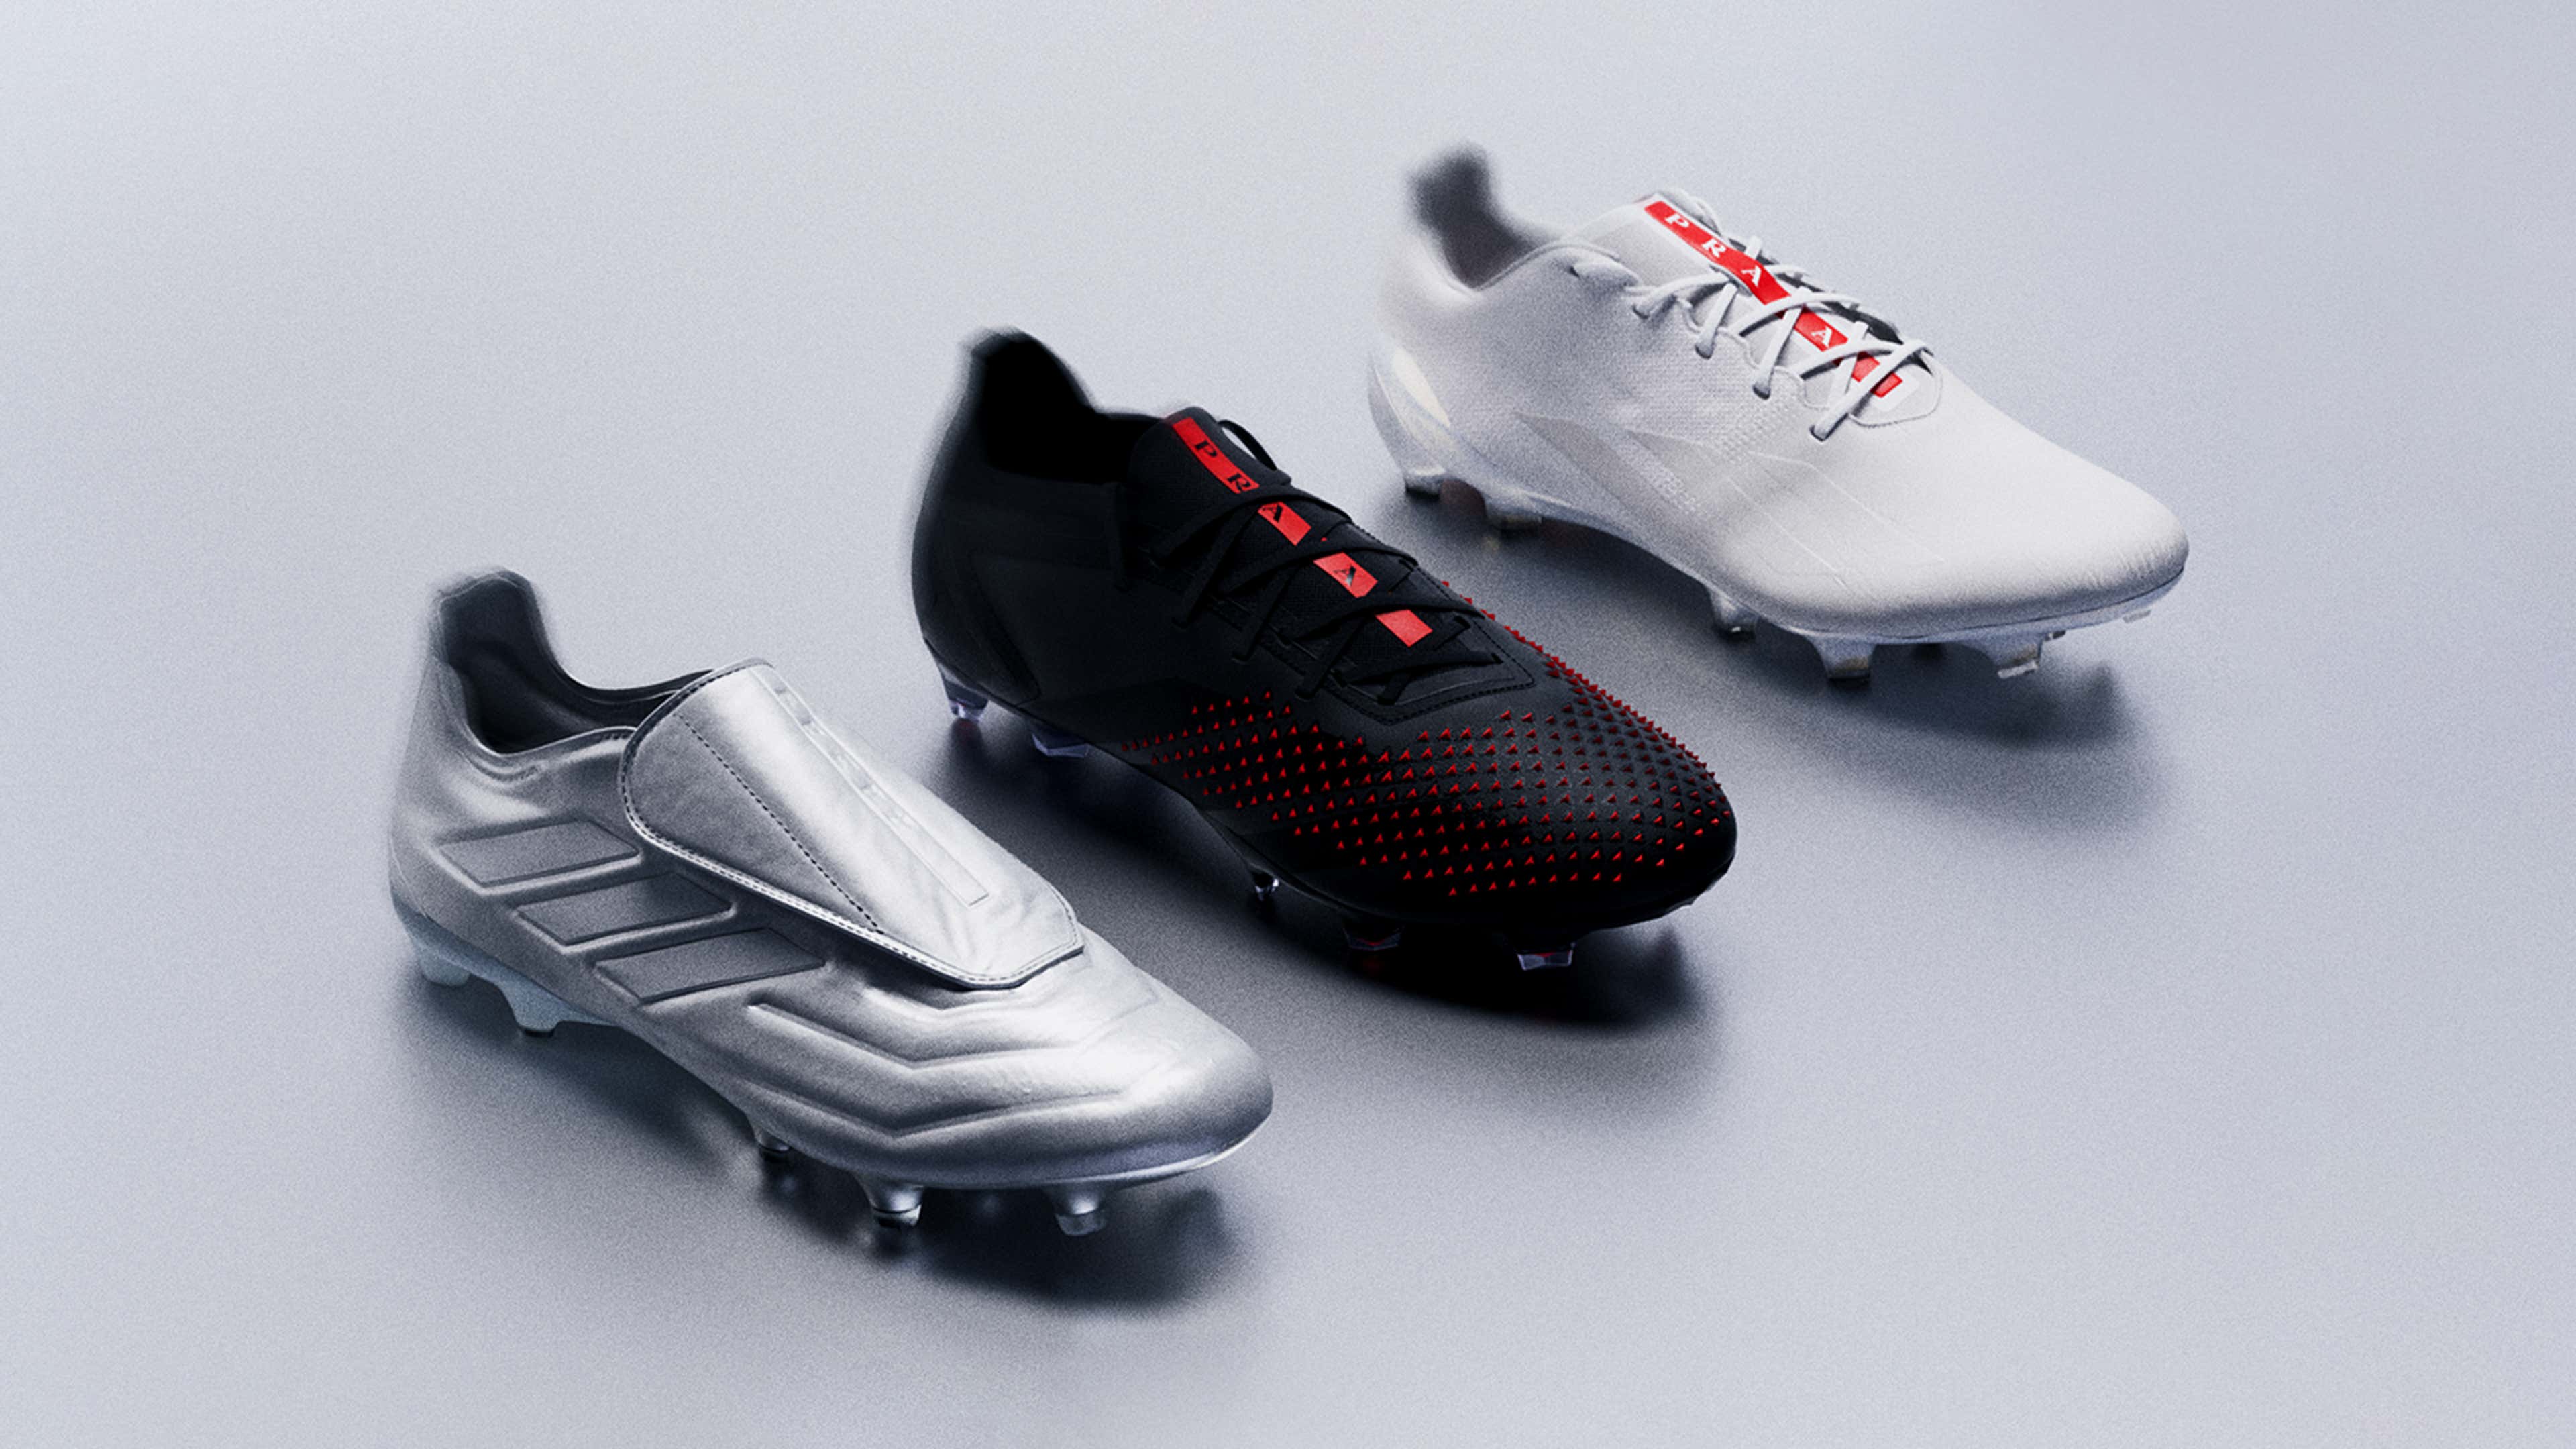 imperdonable Mecánicamente genéticamente adidas and Prada drop limited-edition football boot collection | Goal.com